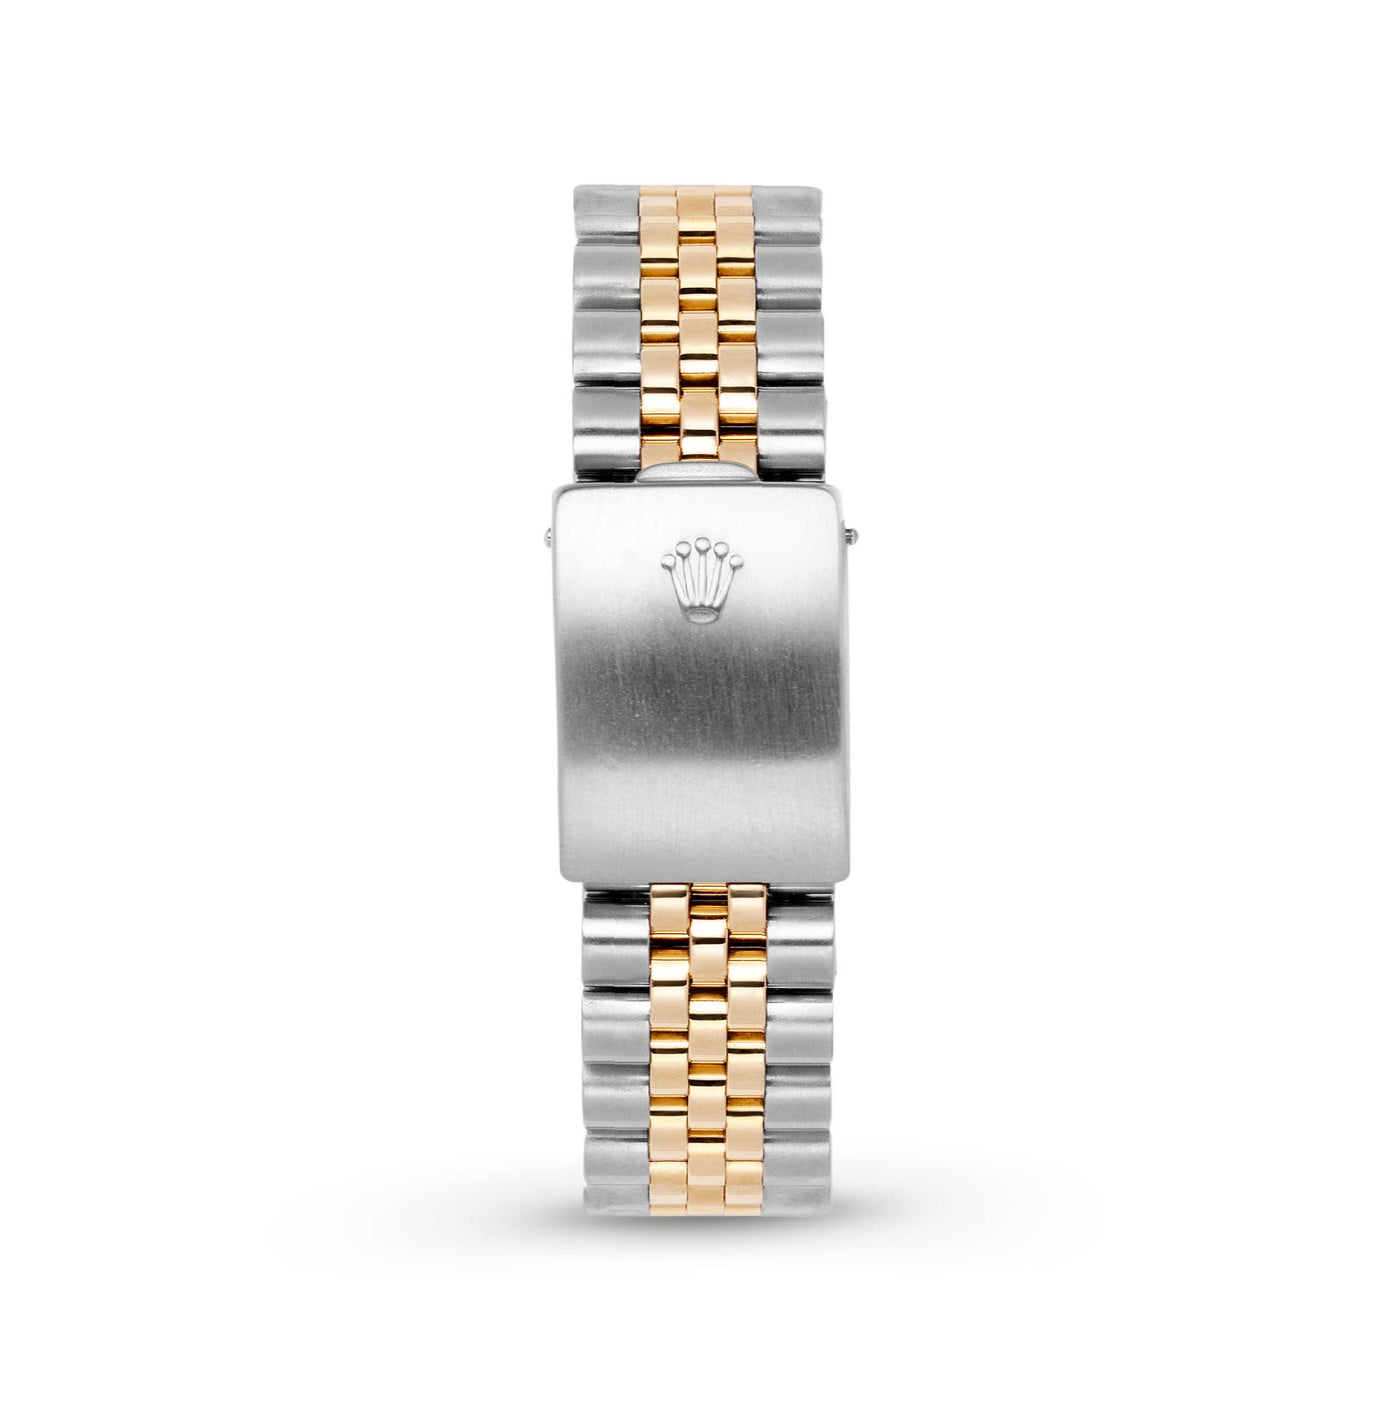 Rolex Datejust Diamond Bezel Watch 36mm White Roman Dial | 2.25ct